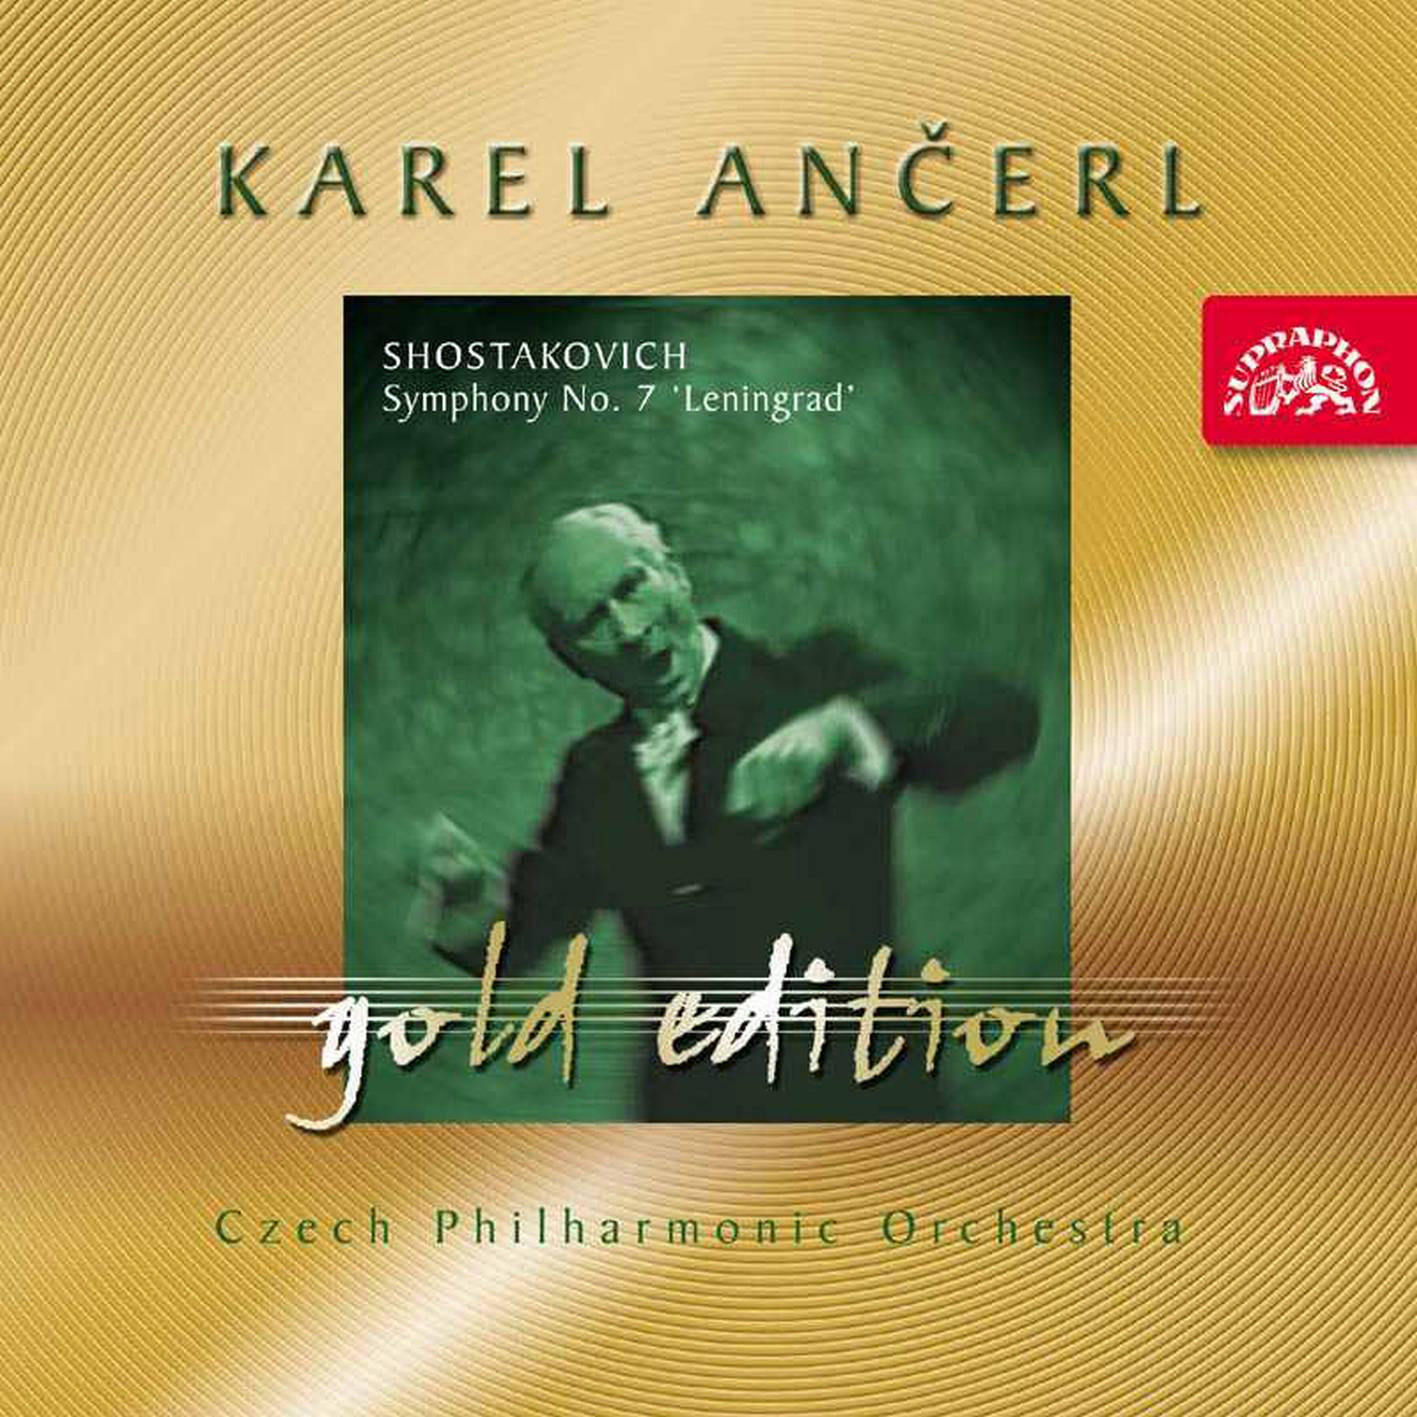 CD Shop - SHOSTAKOVICH, D. KAREL ANCERL VOL.23-GOLD